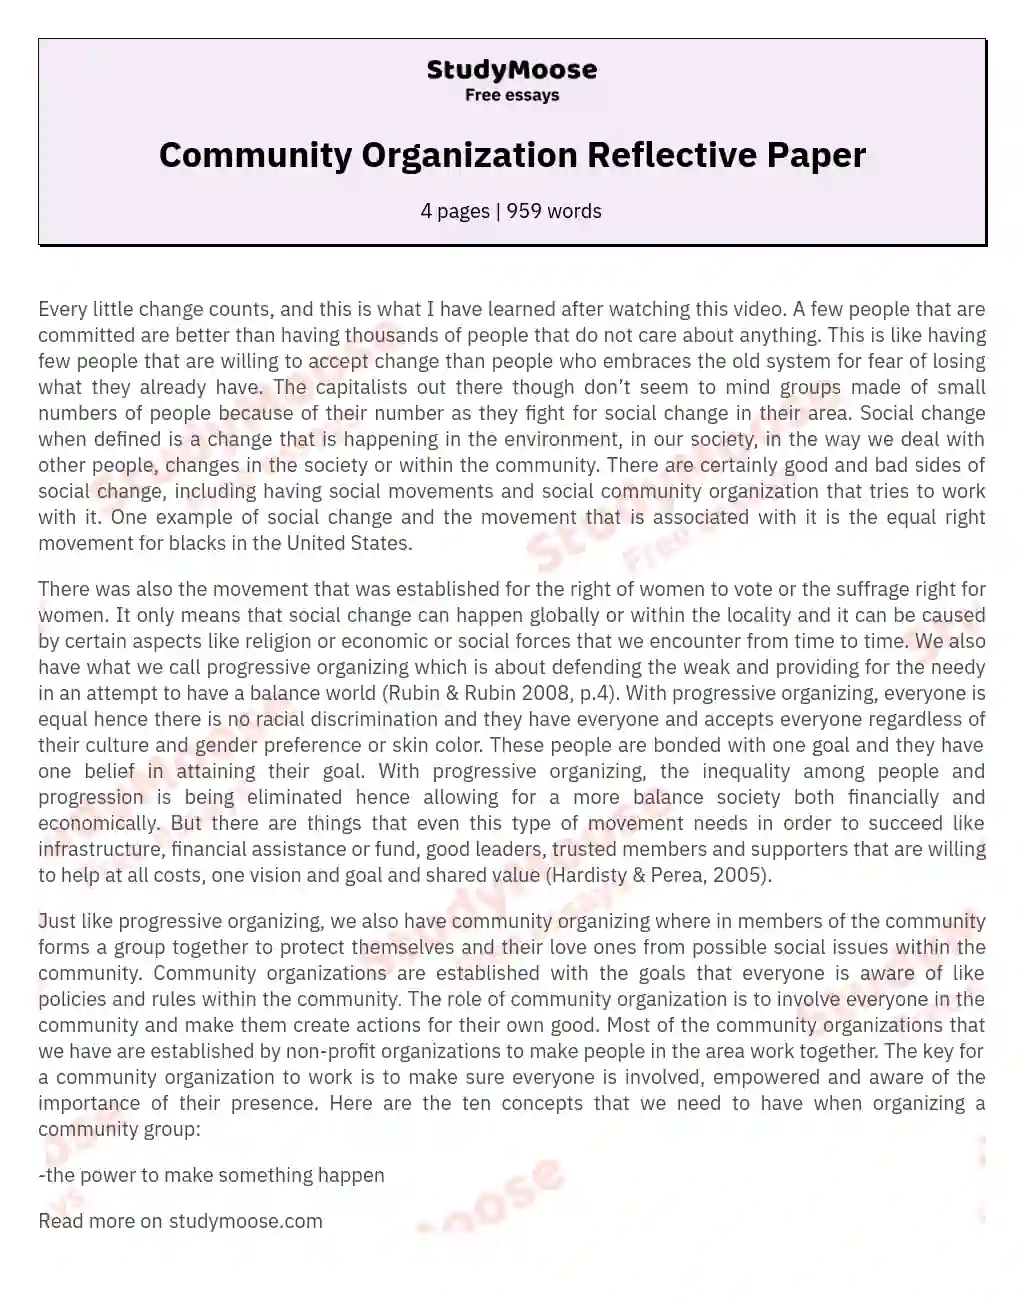 Community Organization Reflective Paper essay